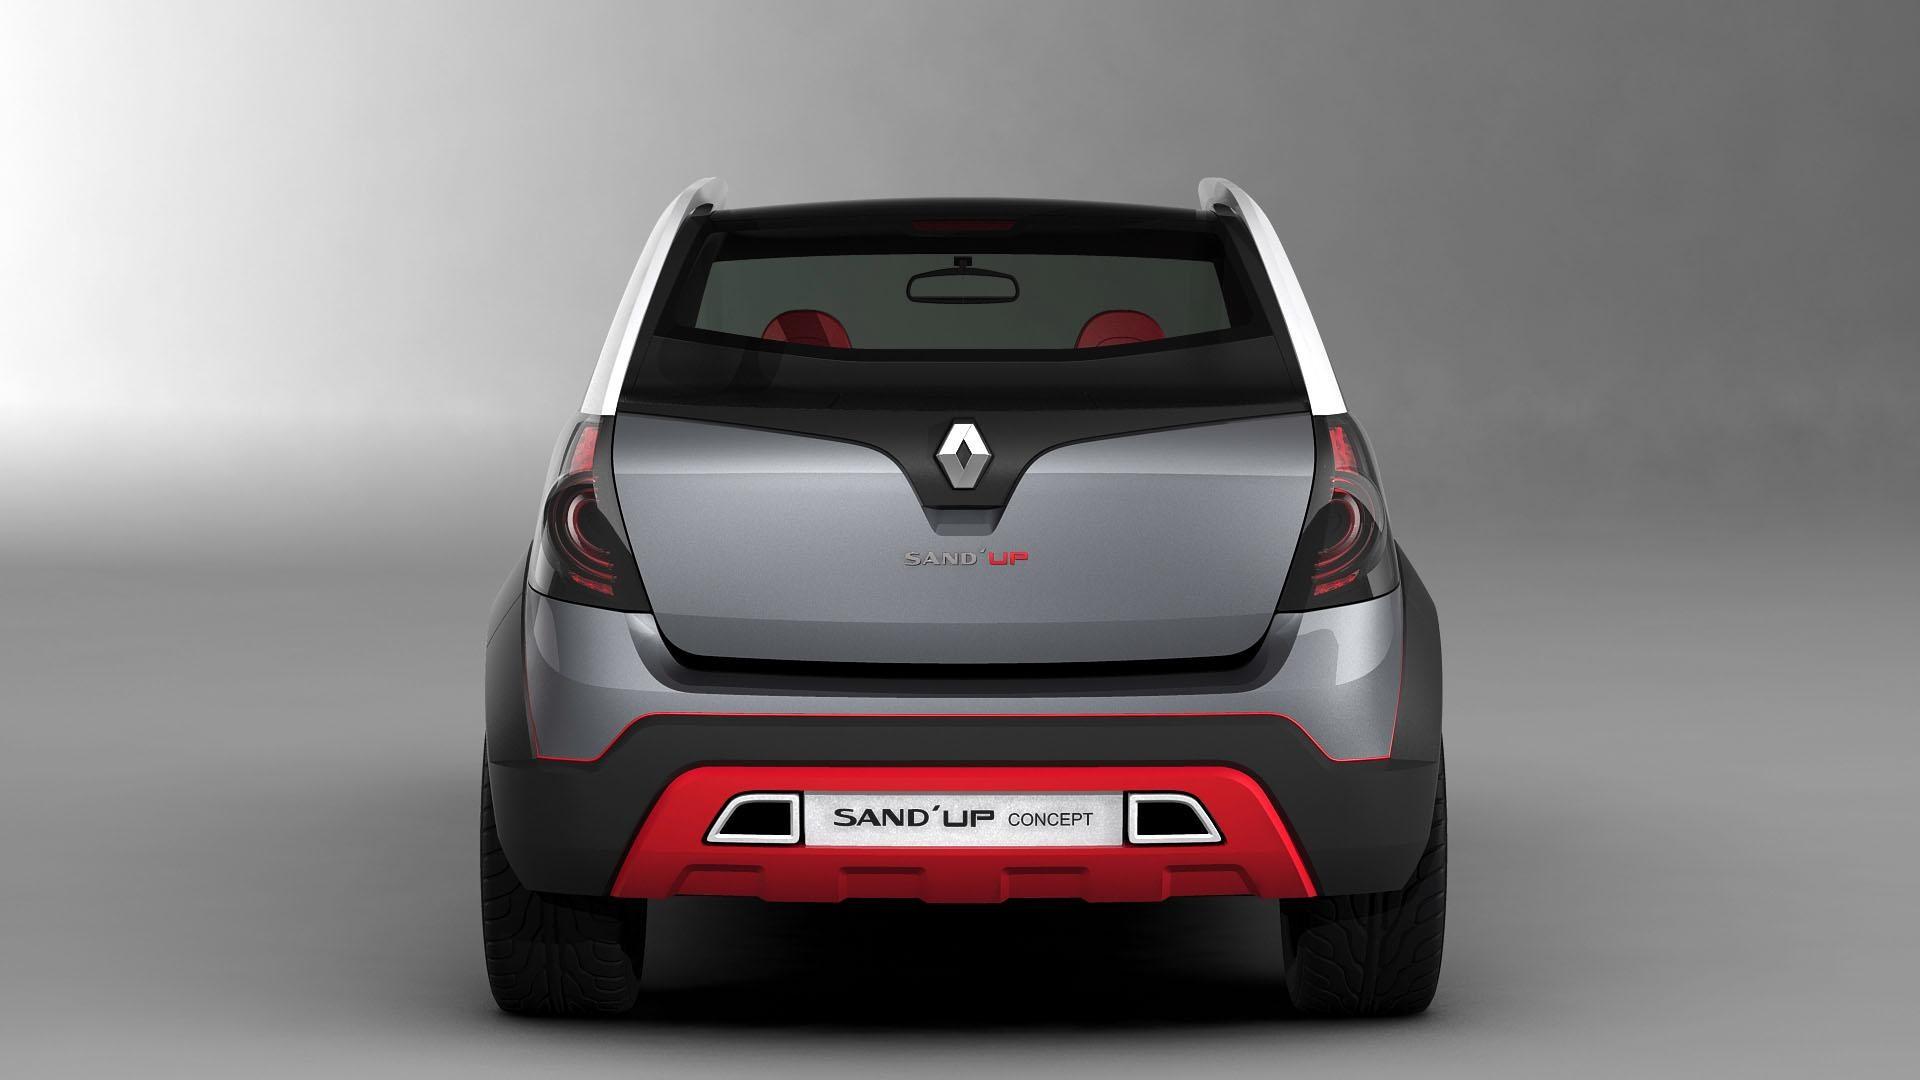 2009 Renault Sandup Concept